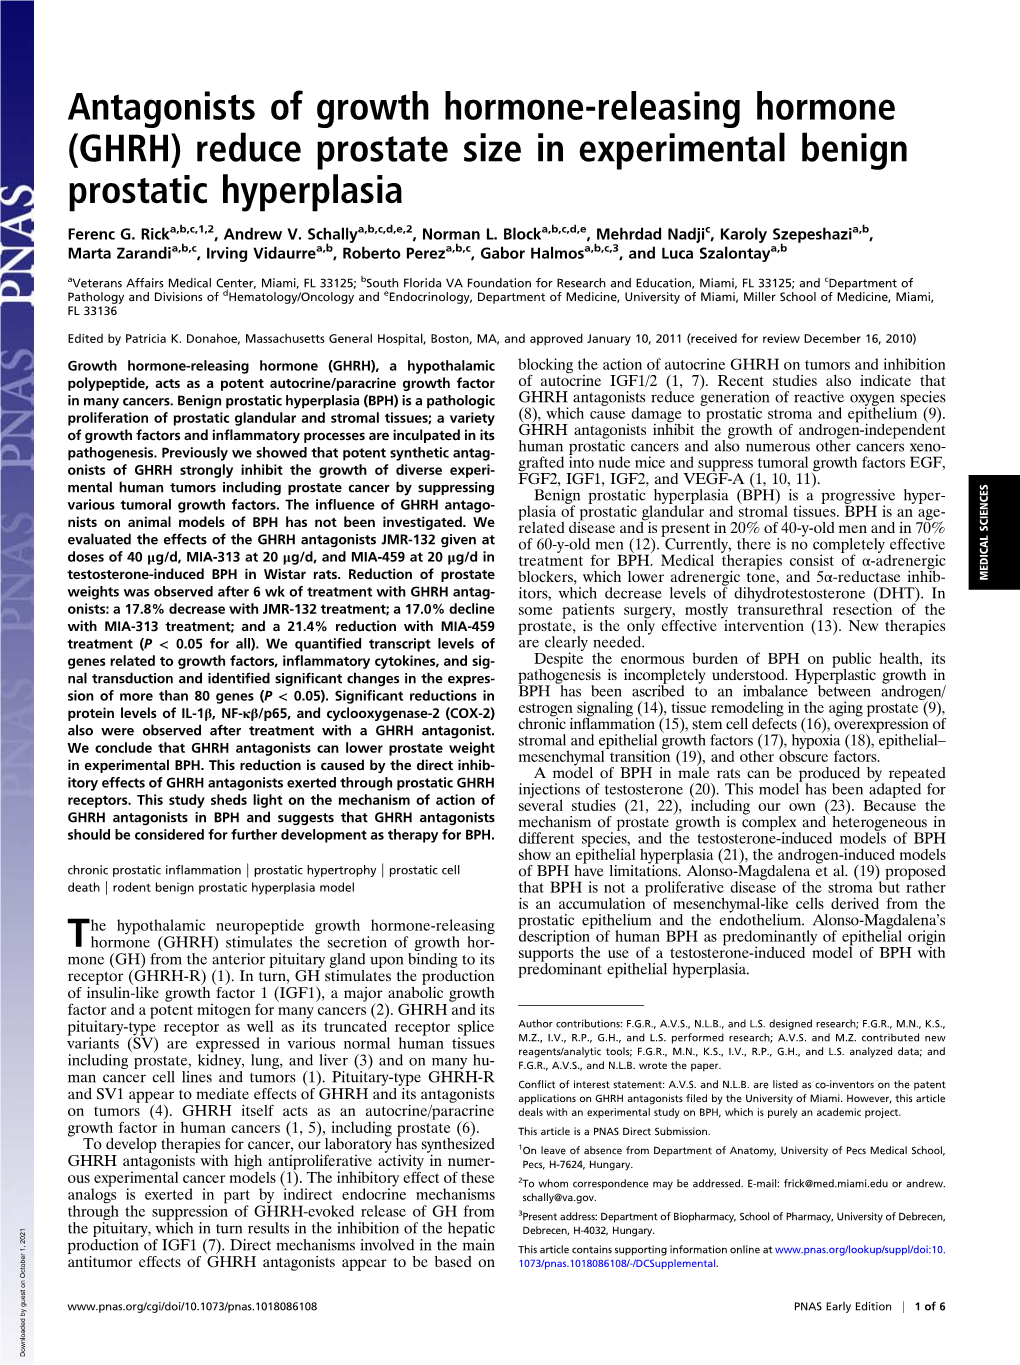 (GHRH) Reduce Prostate Size in Experimental Benign Prostatic Hyperplasia